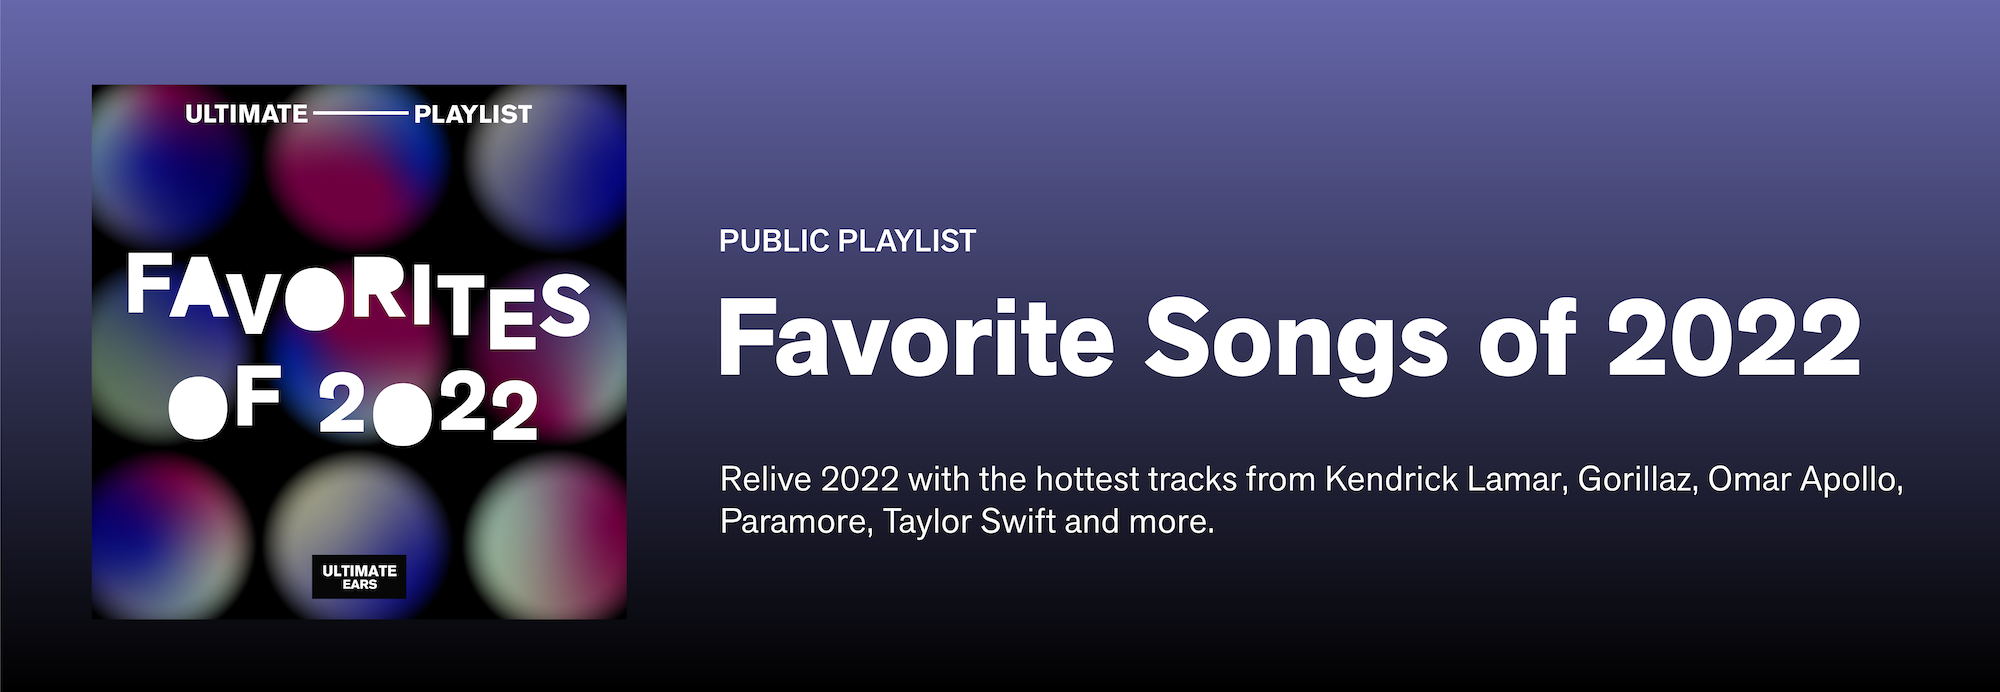 Playlist: Favorite Songs of 2022